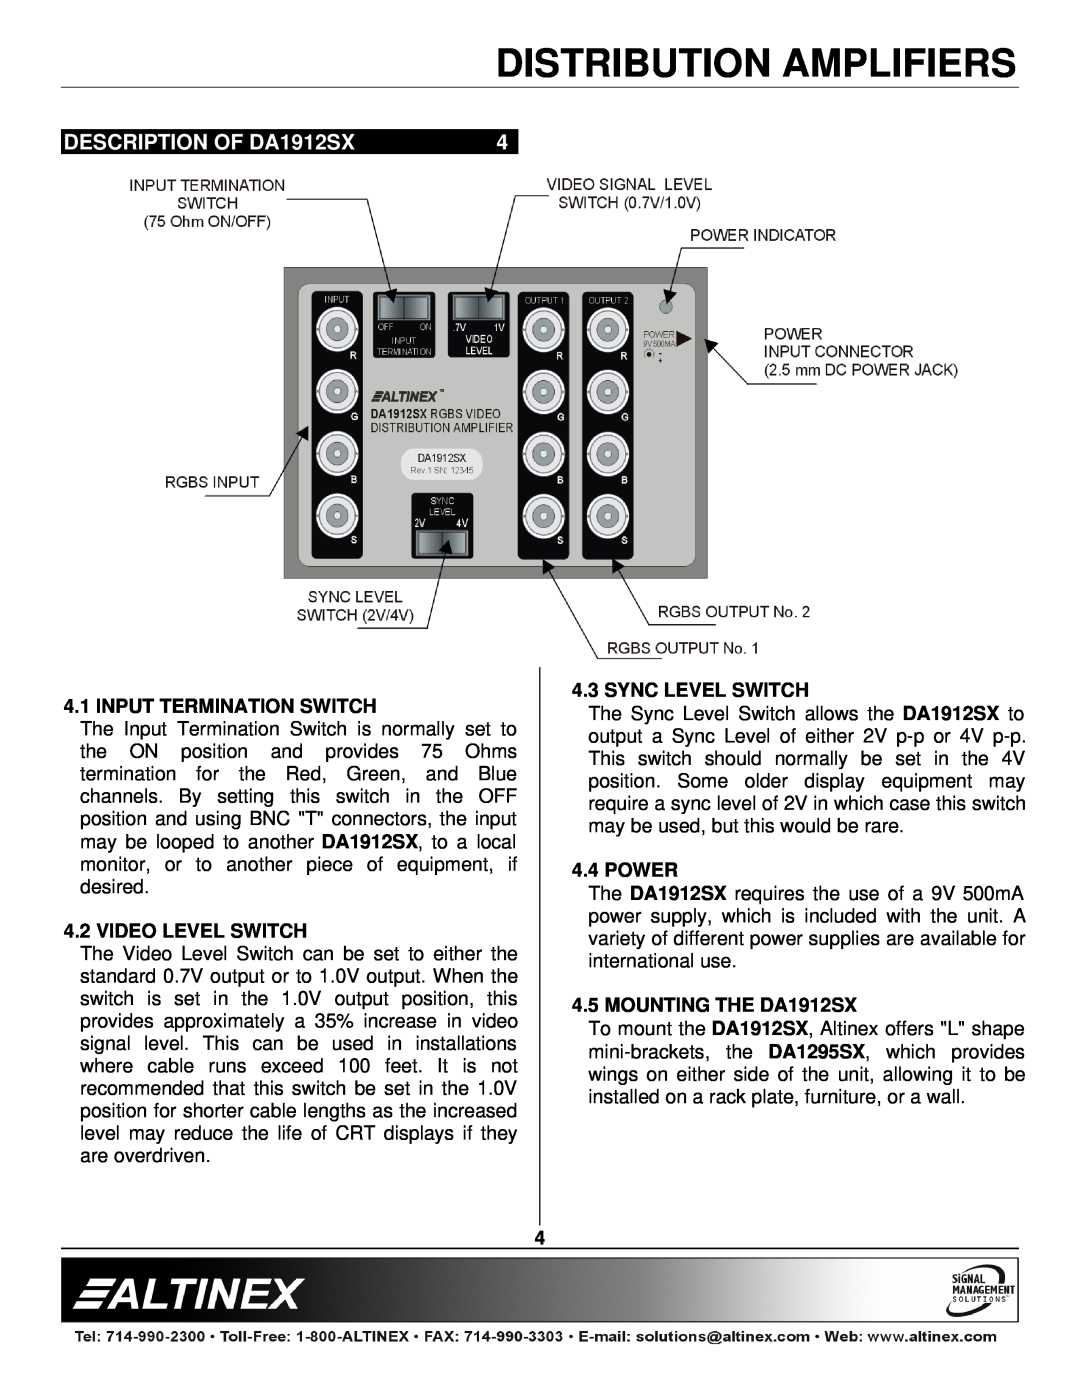 Altinex manual Distribution Amplifiers, DESCRIPTION OF DA1912SX, Input Termination Switch, Video Level Switch, Power 